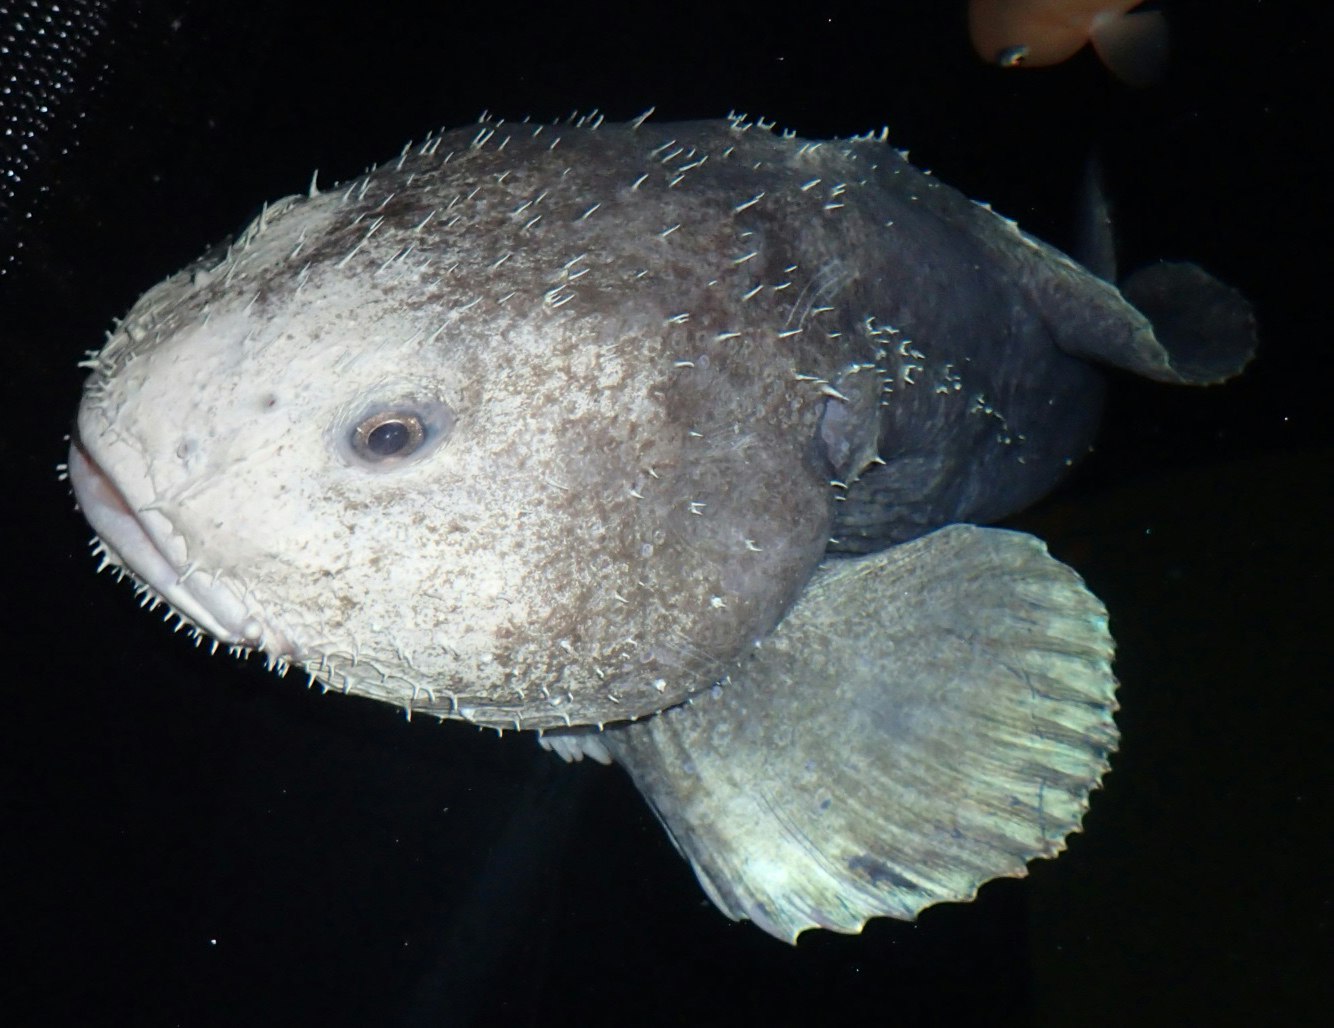 Bob the Blobfish lives in a Japanese aquarium. Image: Aquamarine Fukushima